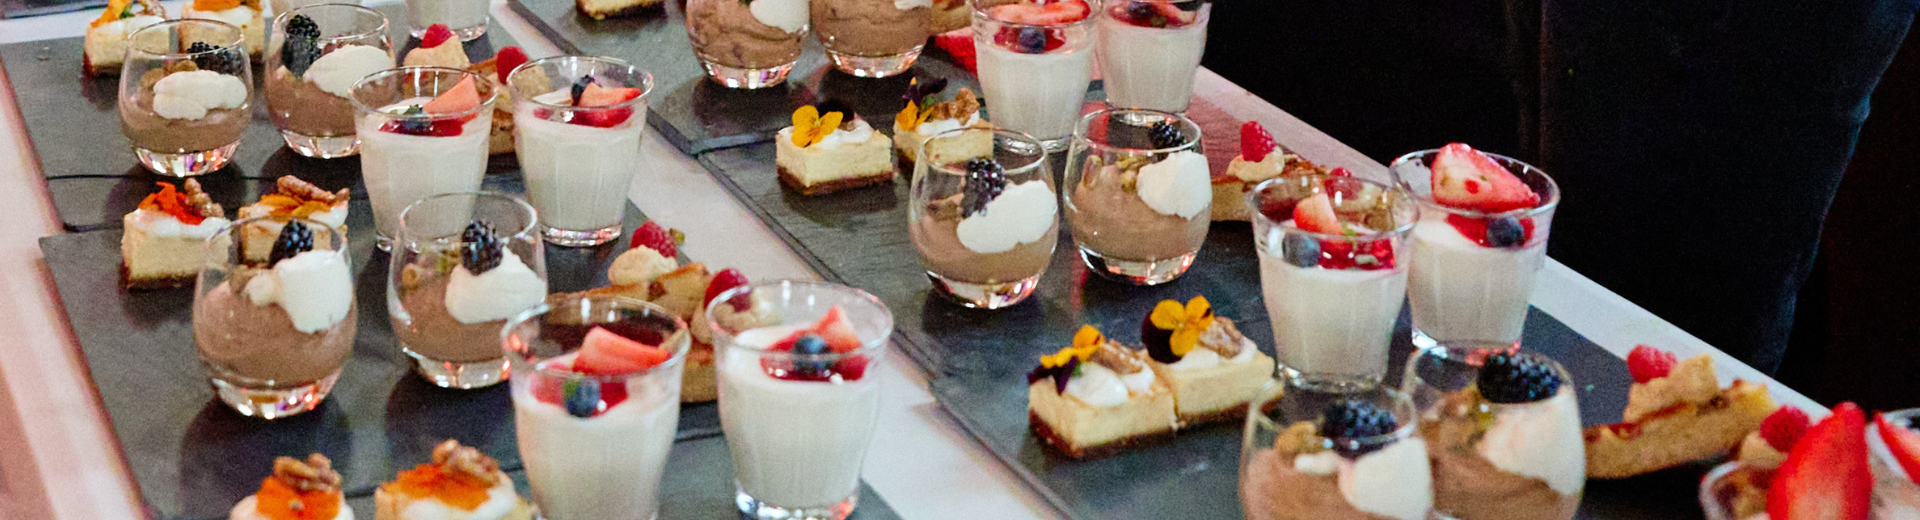 mono desserts buffet catering nederland